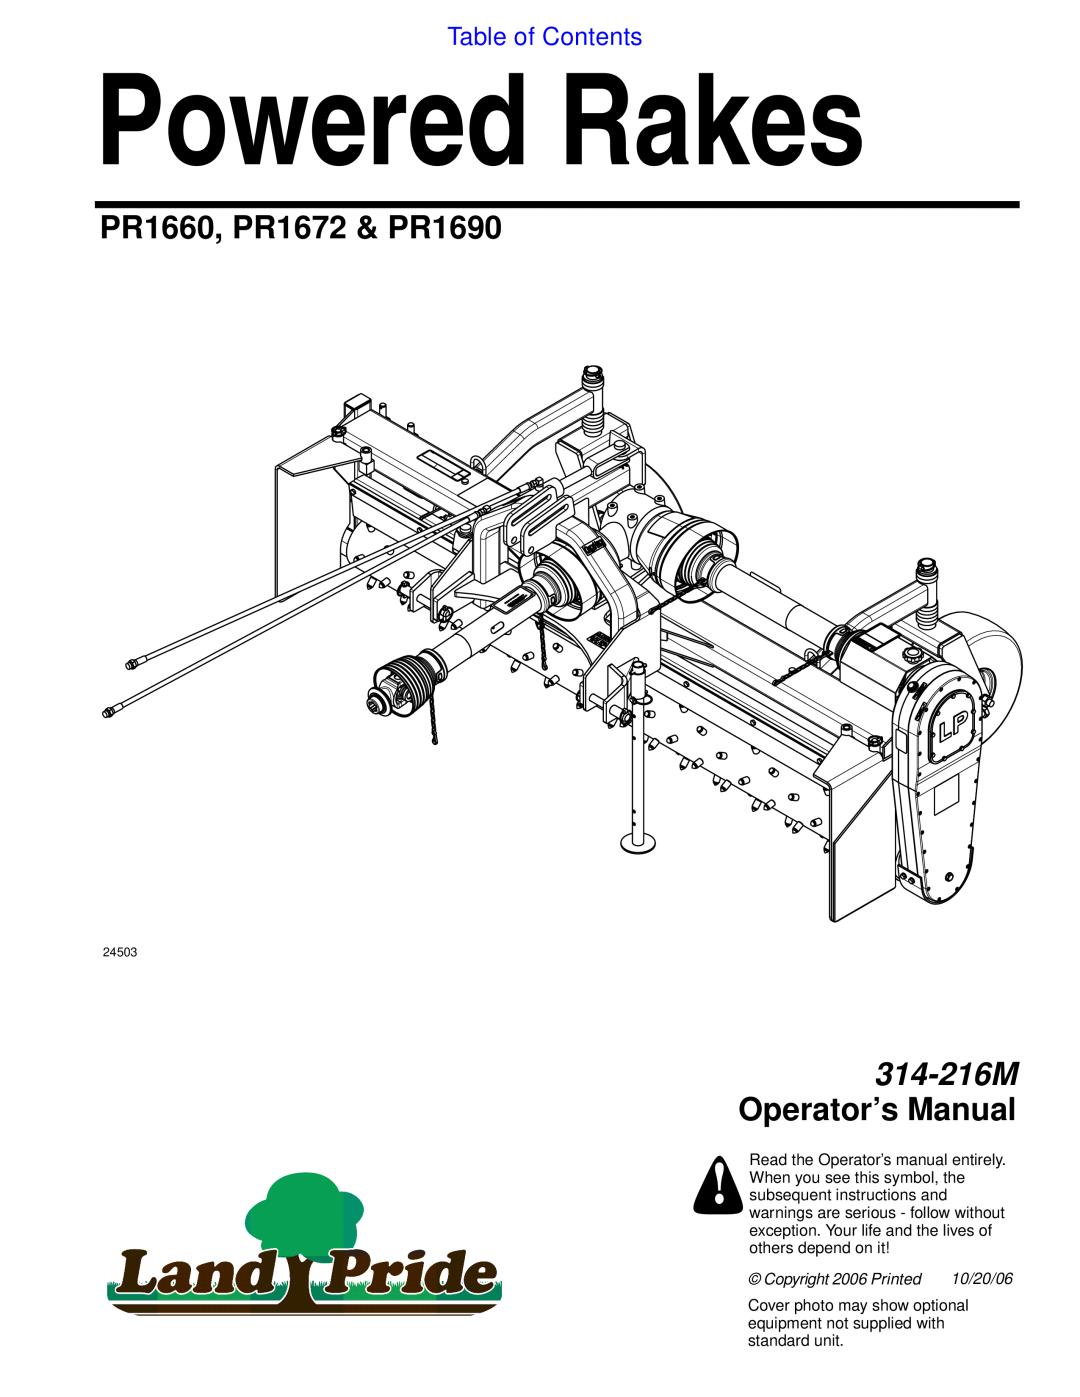 Land Pride manual PR1660, PR1672 & PR1690, Table of Contents, Powered Rakes, 314-216M Operator’s Manual, 10/20/06 